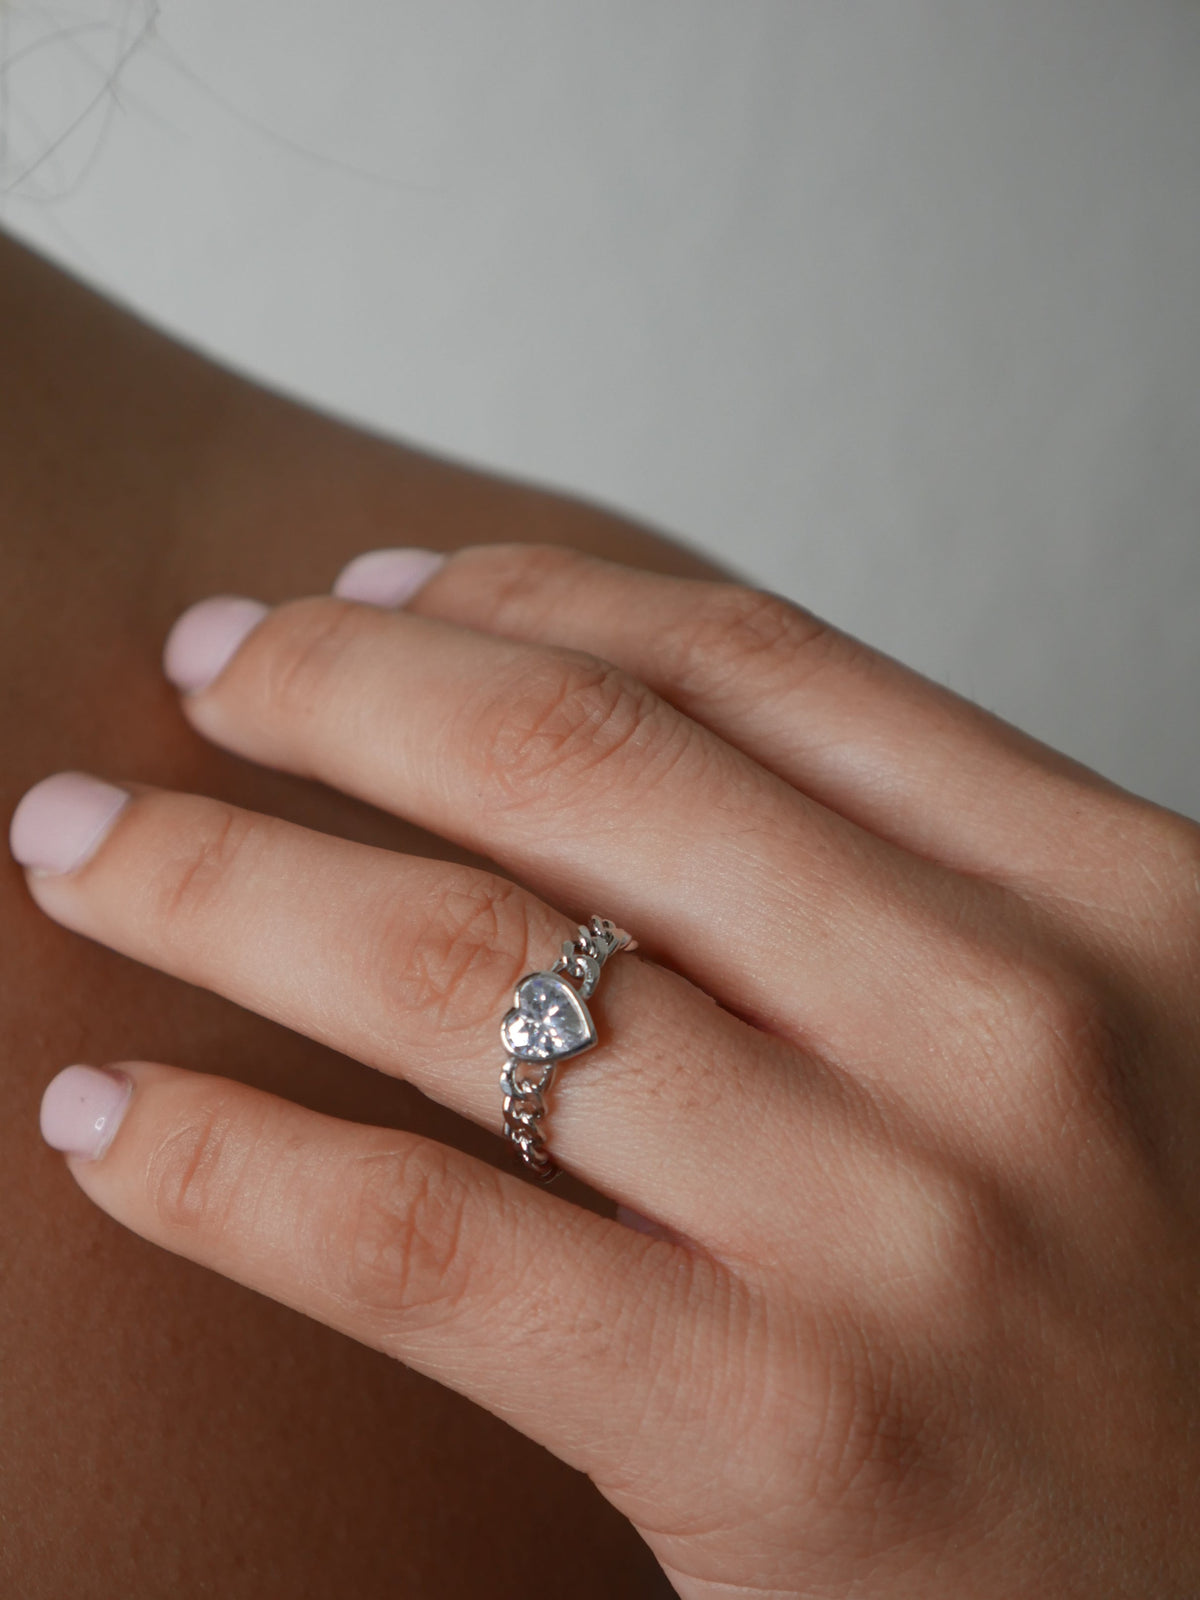 silver rings, heart rings, chain style heart rhinestone, cubic zirconia dainty ring, love ring, anniversary, casual, birthday, cute rings 